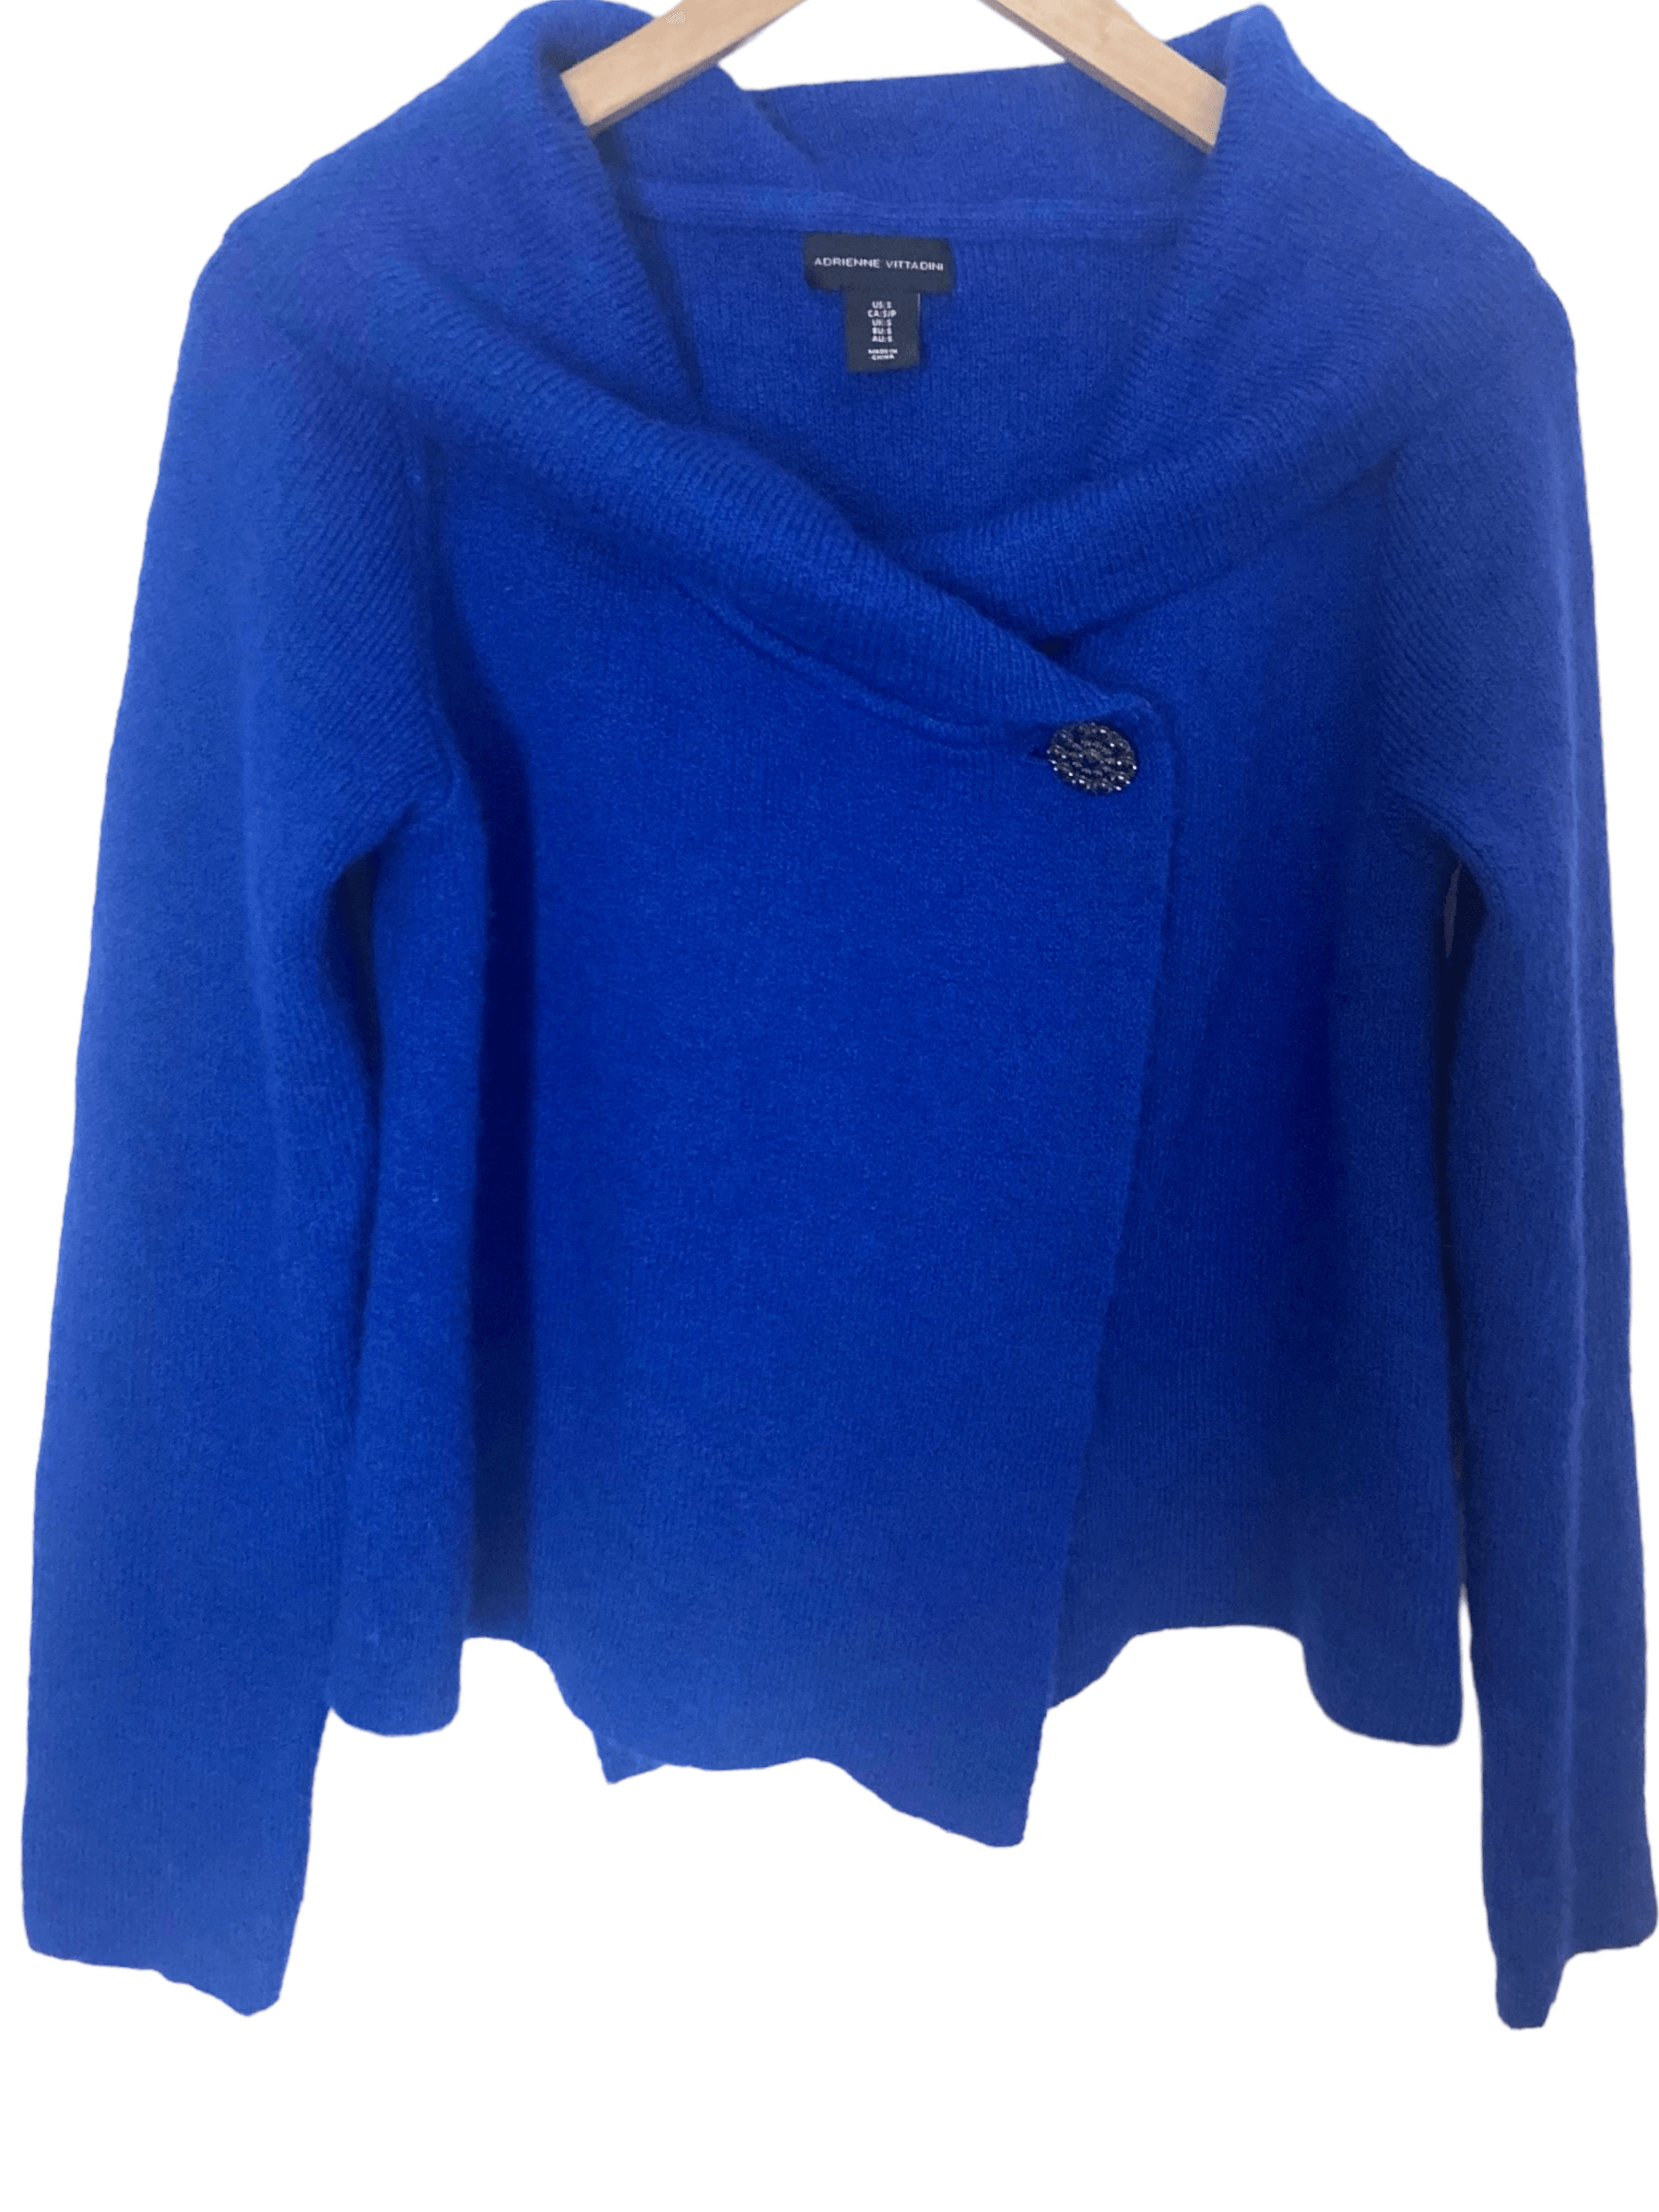 Bright Winter ADRIENNE VITTADINI blue wool wrap sweater jacket